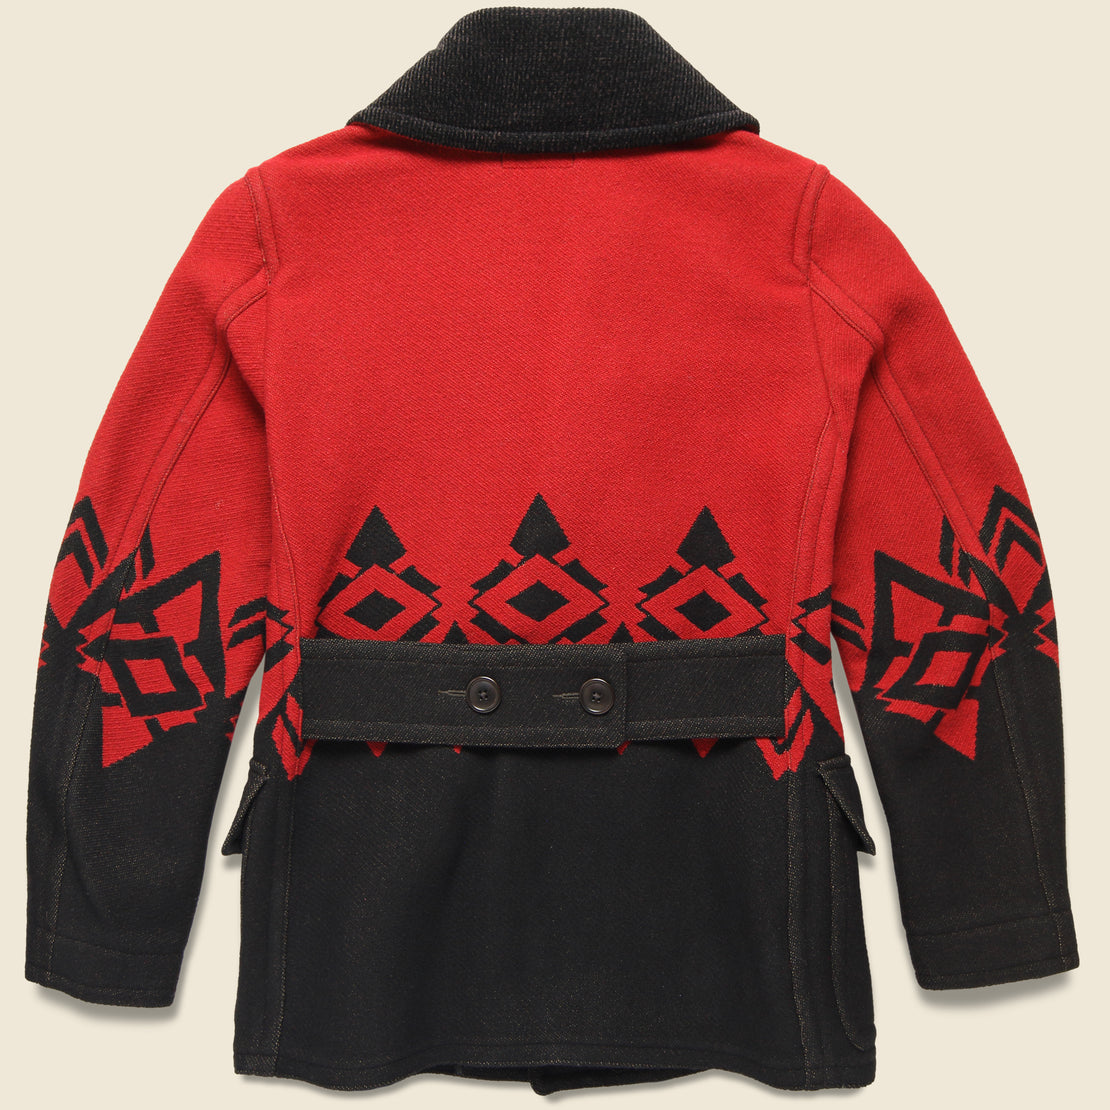 Huxham Wool Jacket - Vintage Red/Black - RRL - STAG Provisions - Outerwear - Coat / Jacket